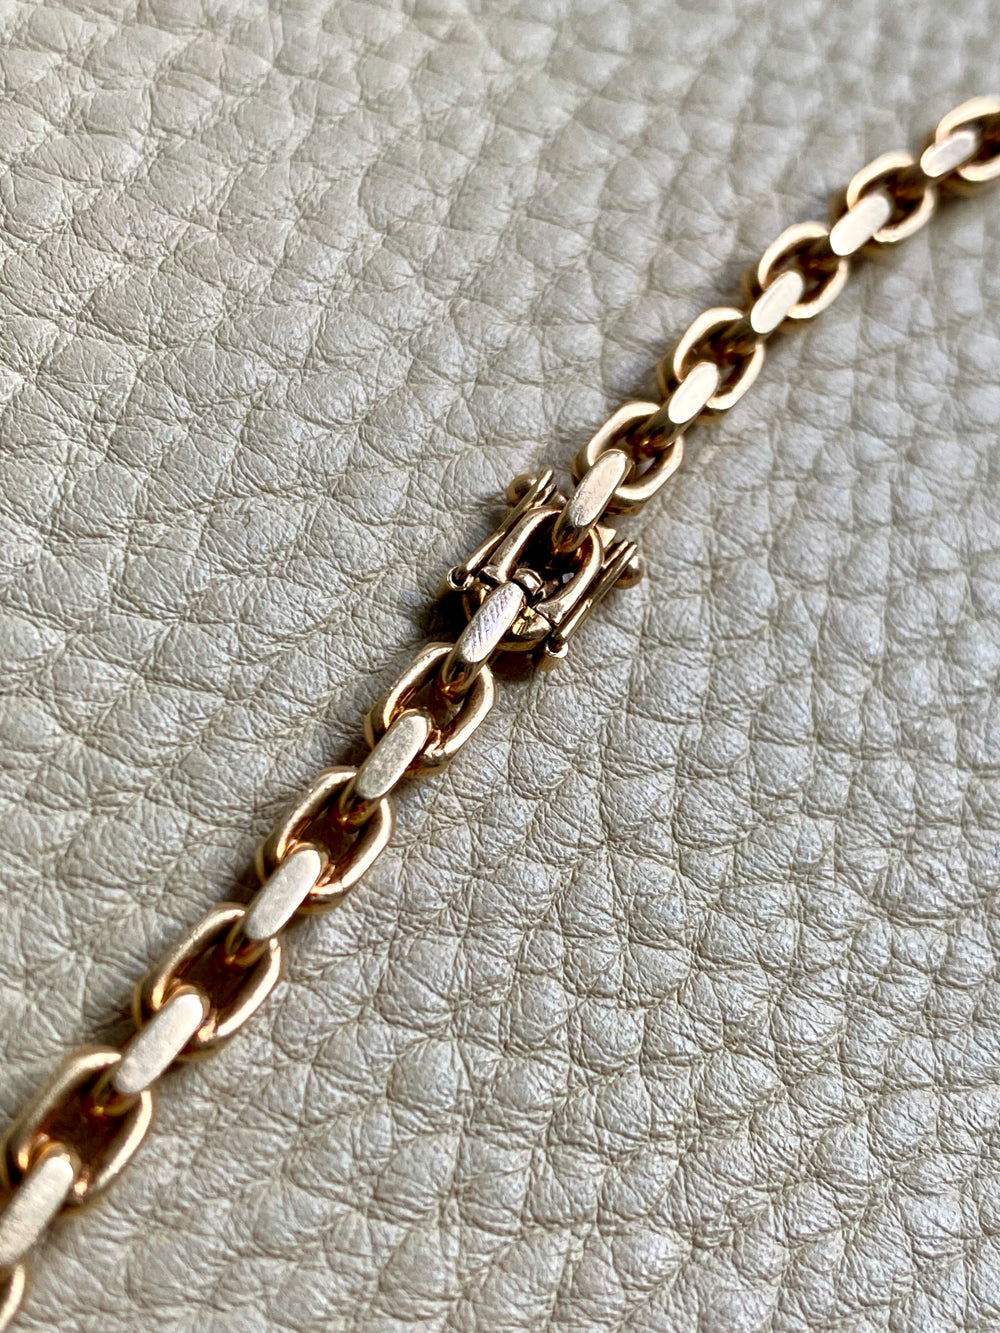 WHOA 45g Midcentury era biker link necklace! - solid 14k gold links- 16.5 inch length